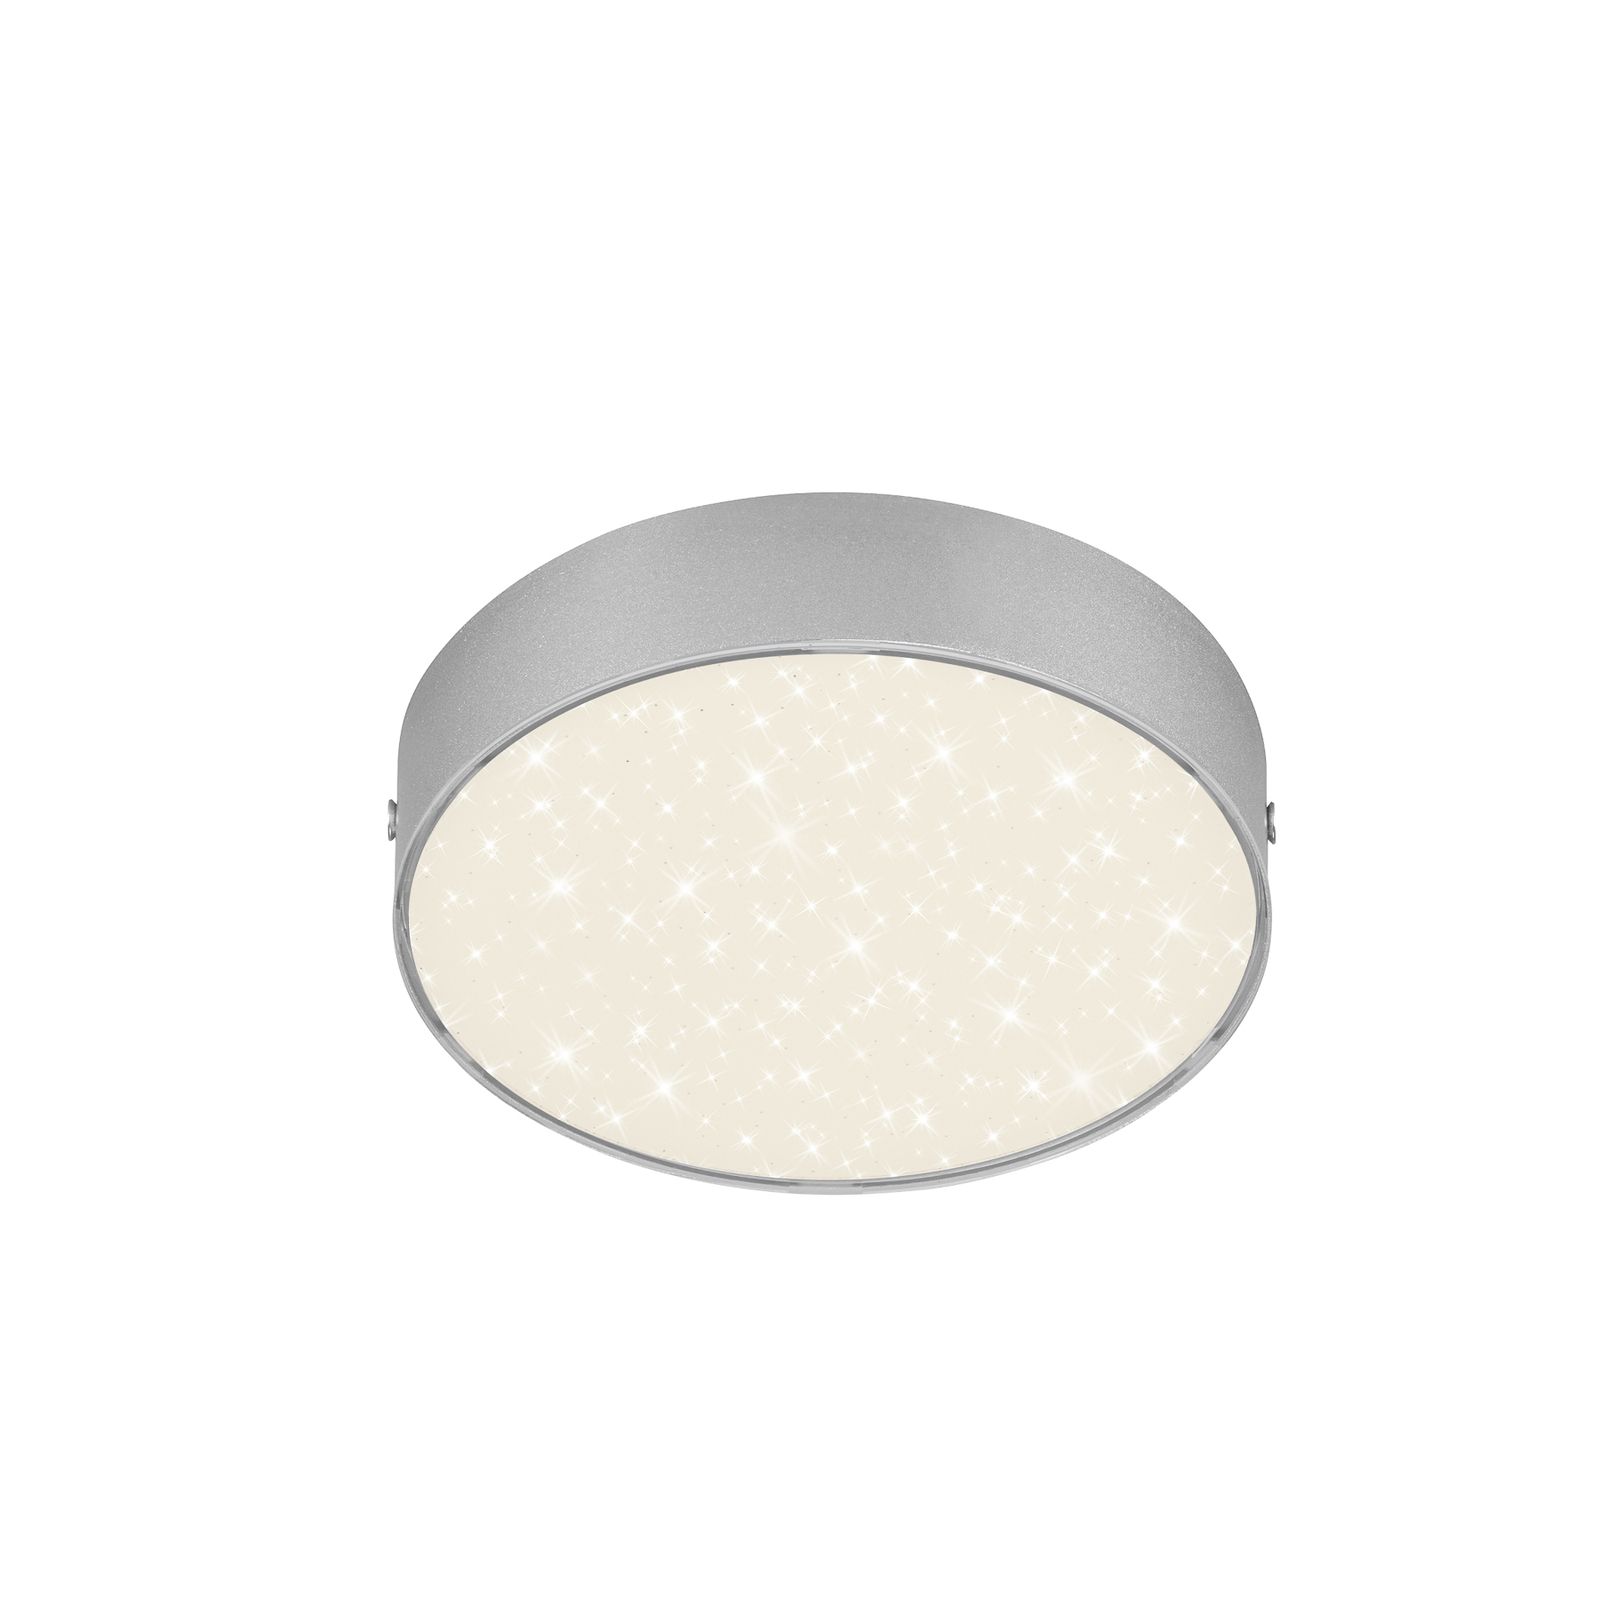 LED Star plafondlamp, Ø 15,7 cm, zilver